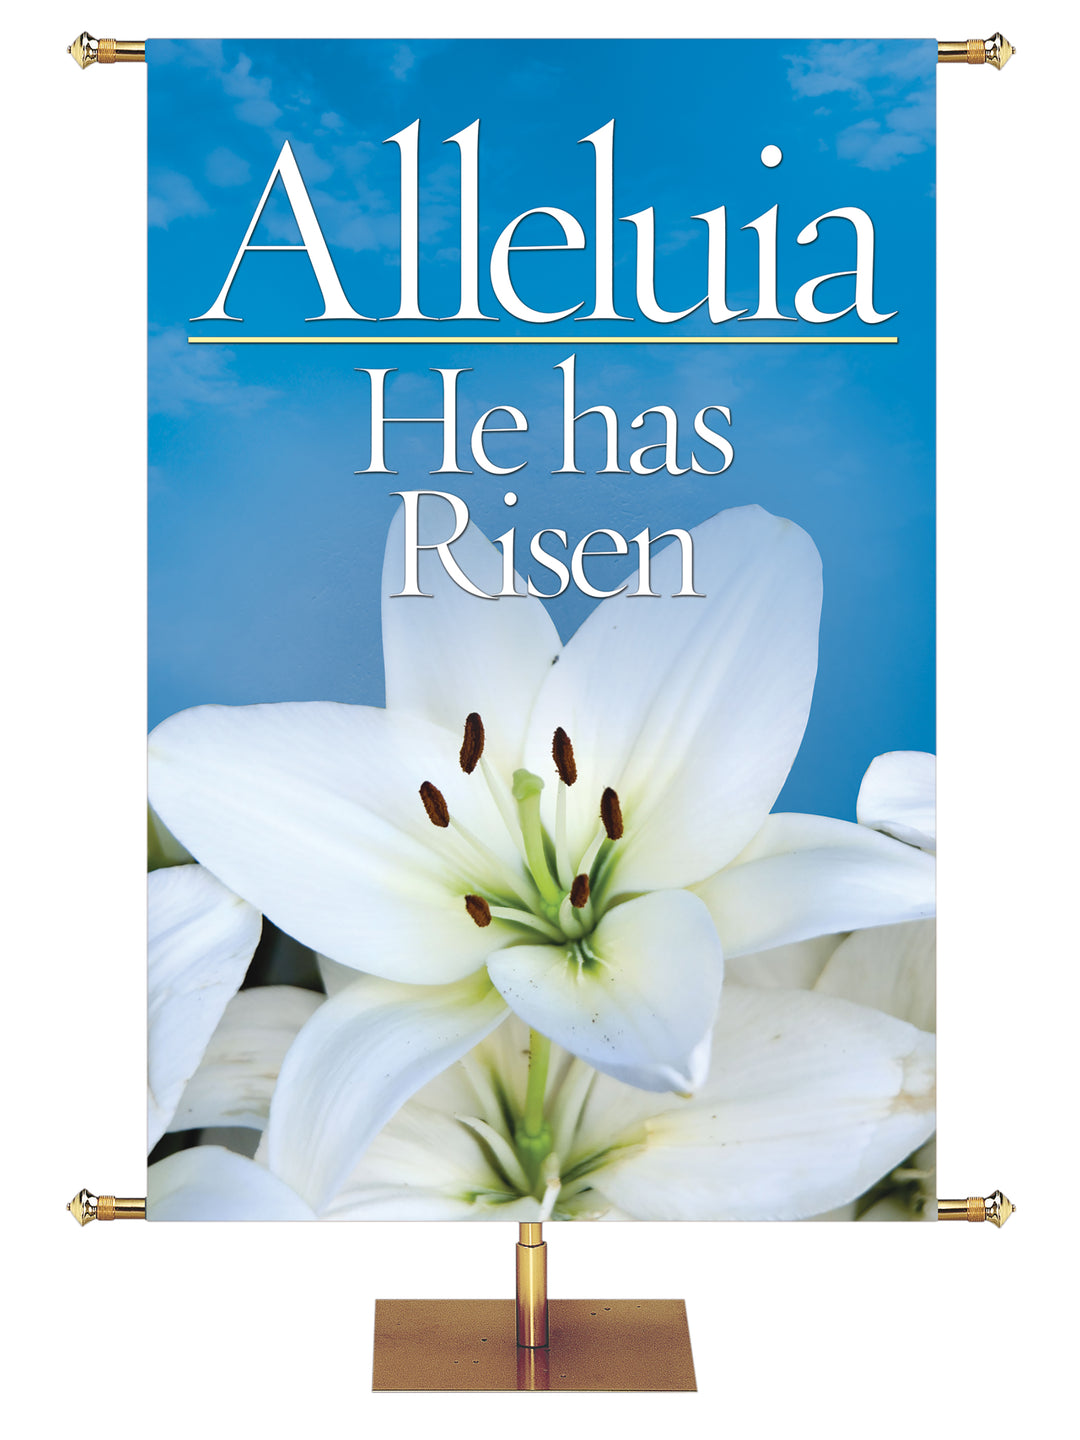 Joyous Easter Alleluia He Has Risen - Easter Banners - PraiseBanners